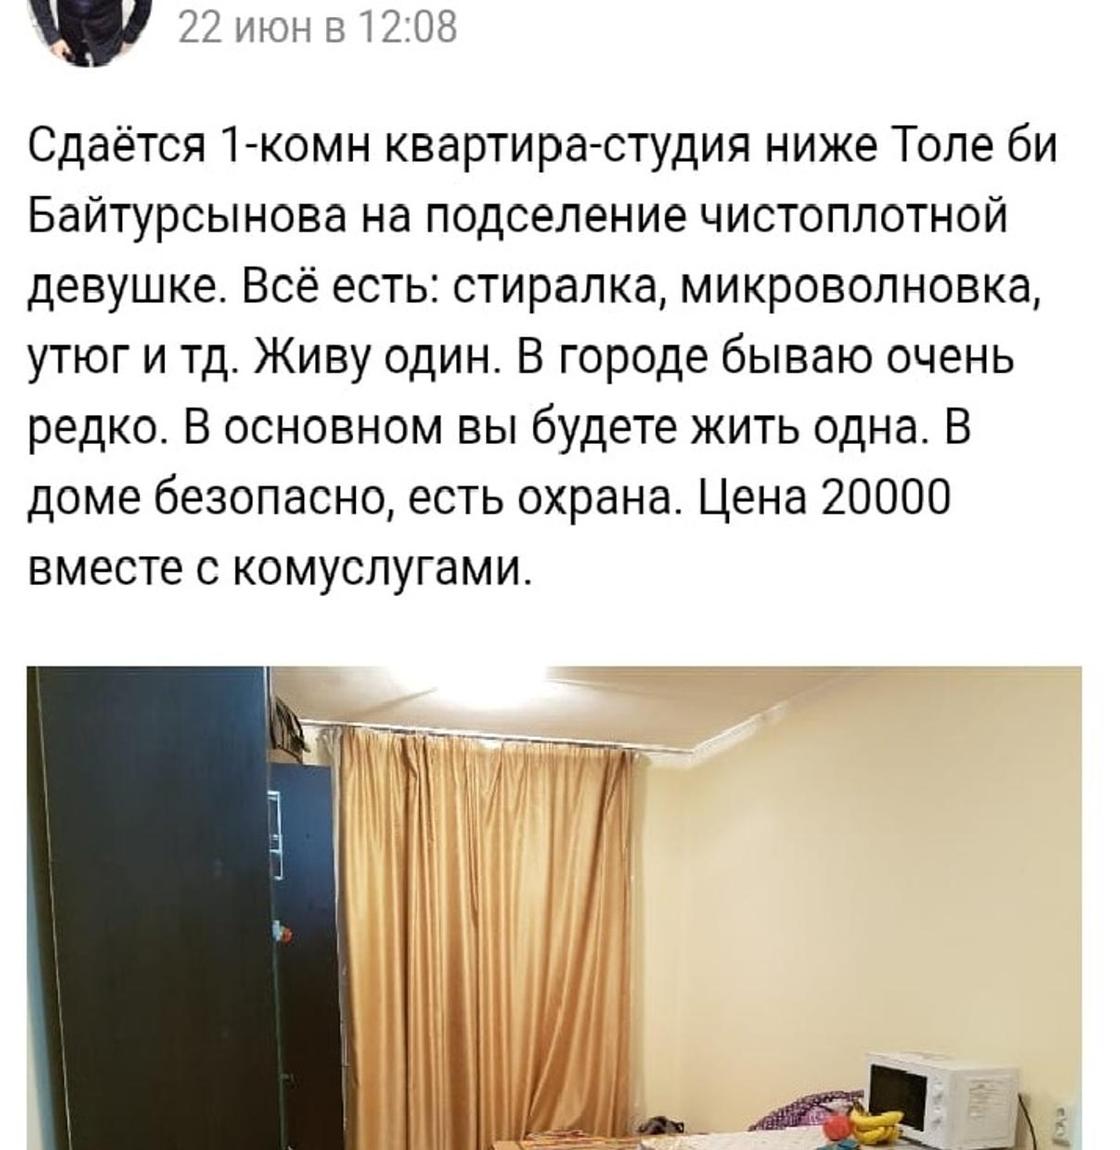 Алматинцы сдают квартиры красивым девушкам дешевле